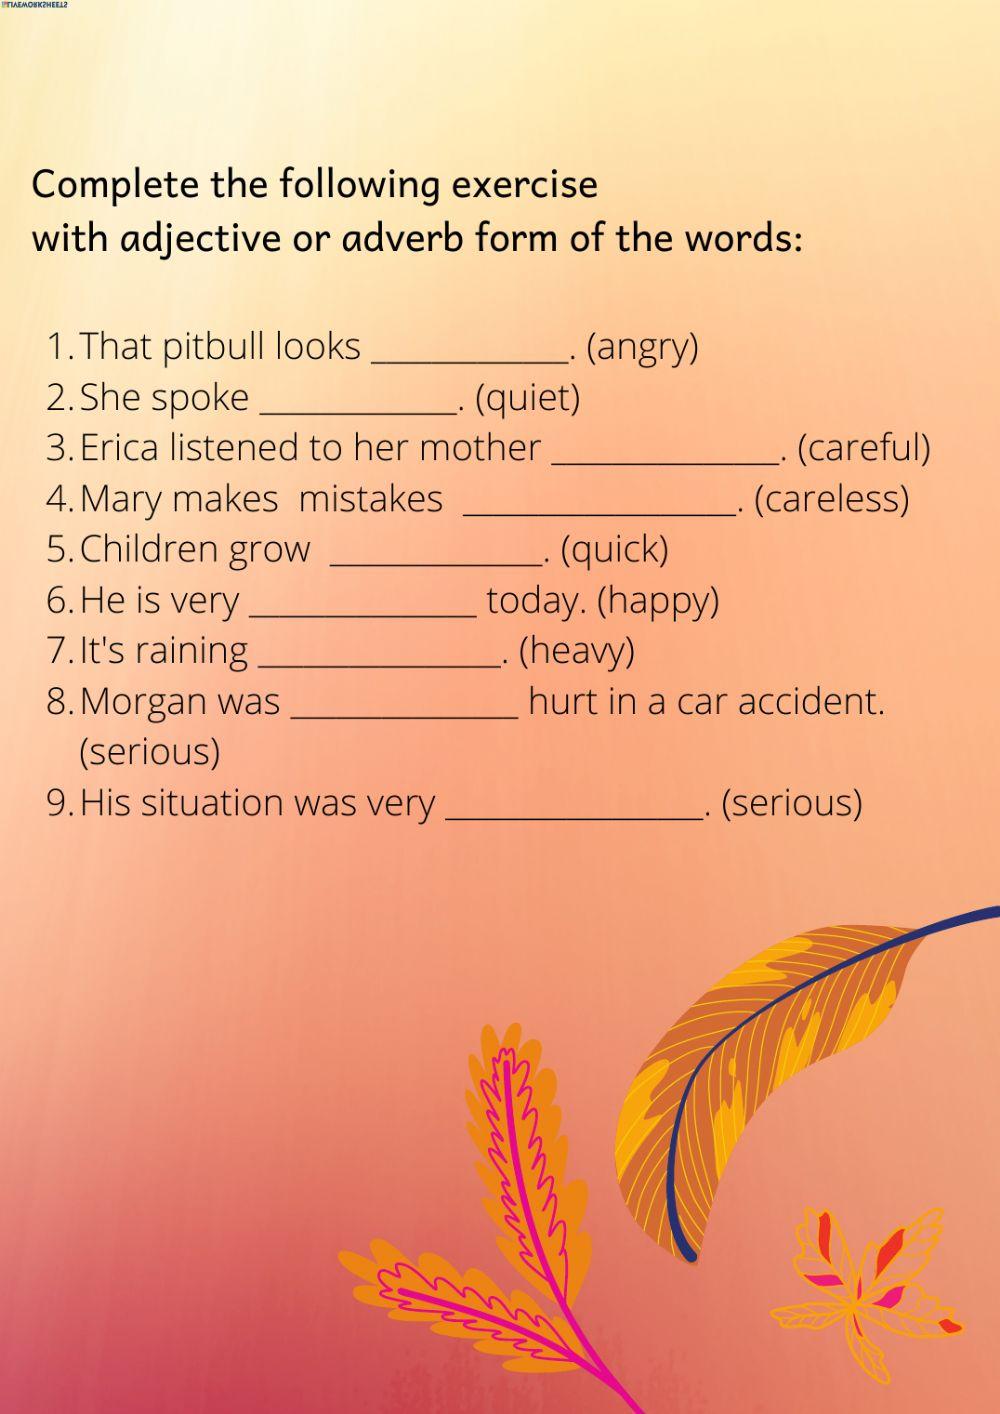 Adverbs VS Adjectives